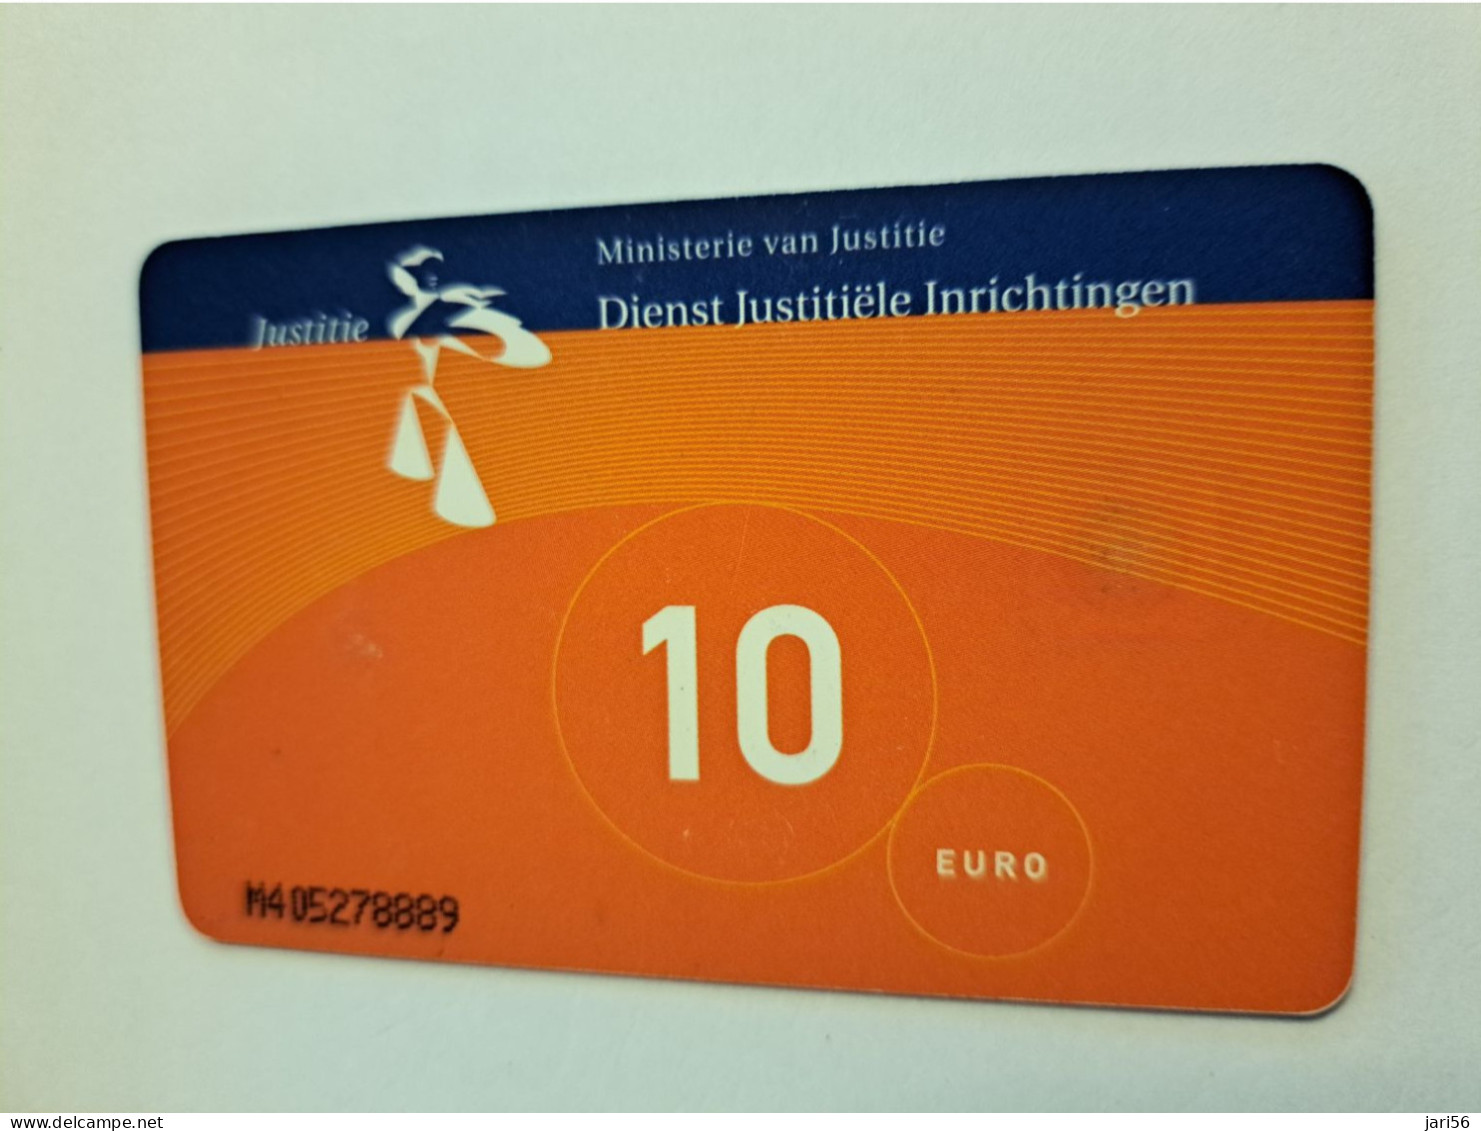 NETHERLANDS   € 10,-  ,-  / USED  / DATE  01-01/06  JUSTITIE/PRISON CARD  CHIP CARD/ USED   ** 16024** - Cartes GSM, Prépayées Et Recharges